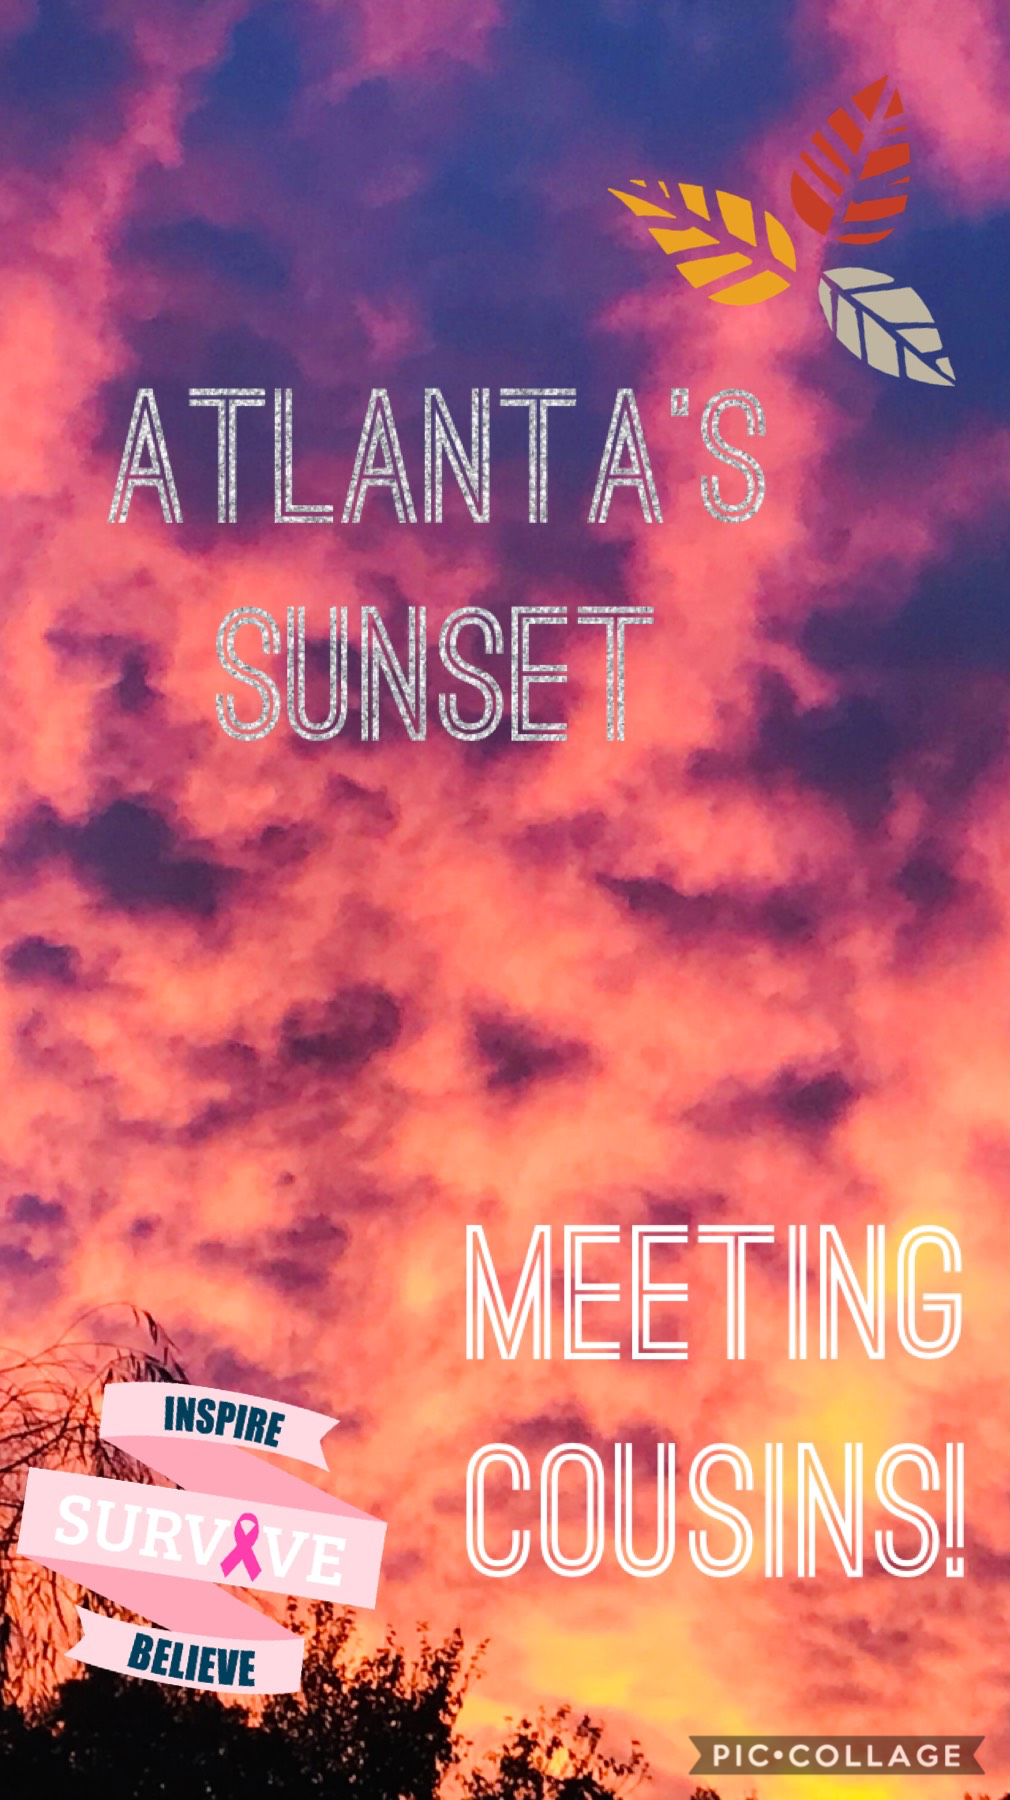 Atlanta’s sunset!!